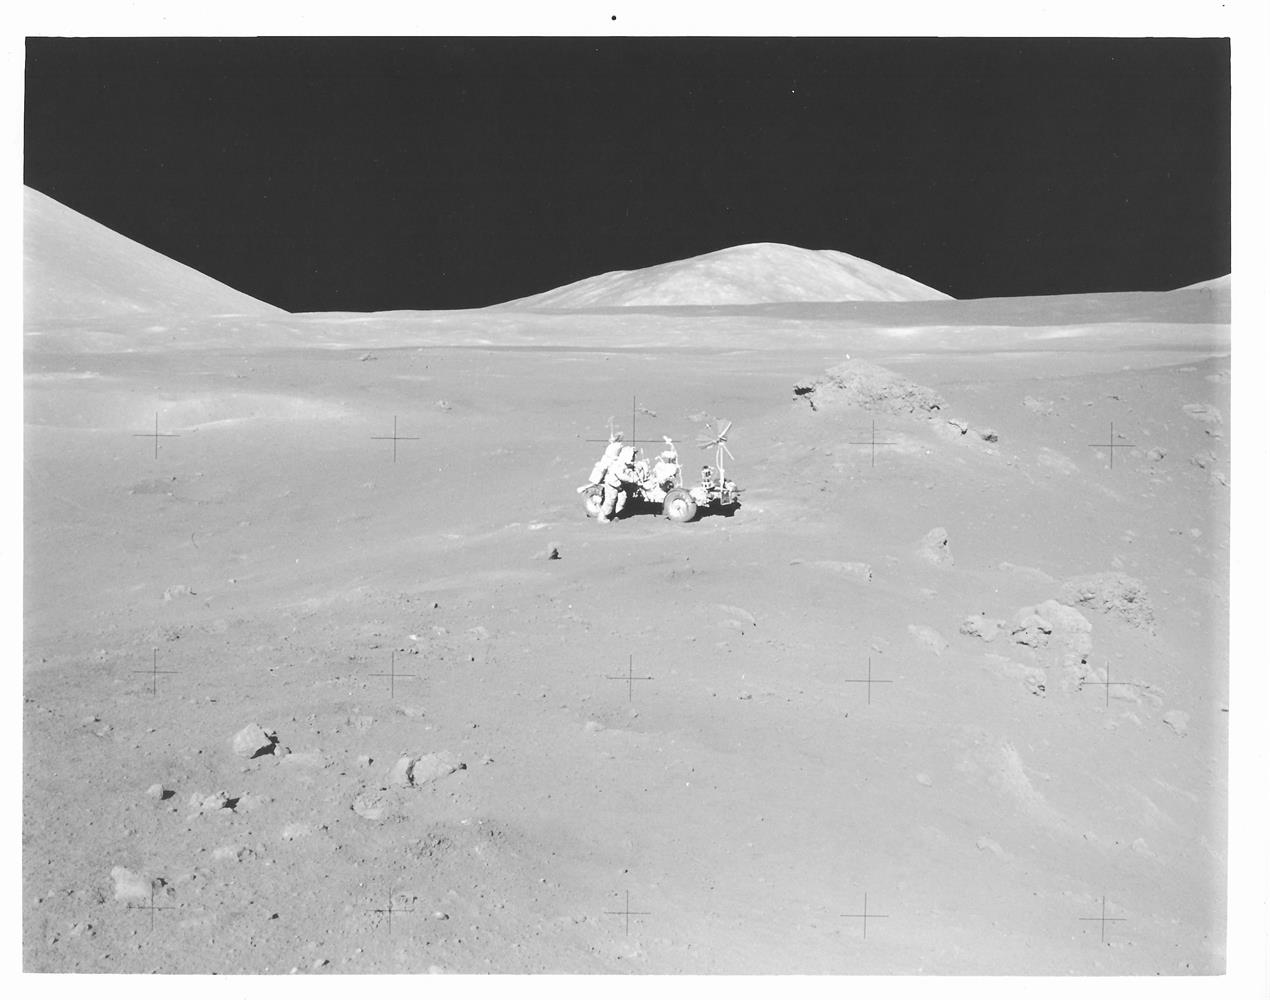 Harrison Schmitt working at the Lunar Rover at Shorty Crater, EVA 2, Apollo 17, 7-19 Dec 1972